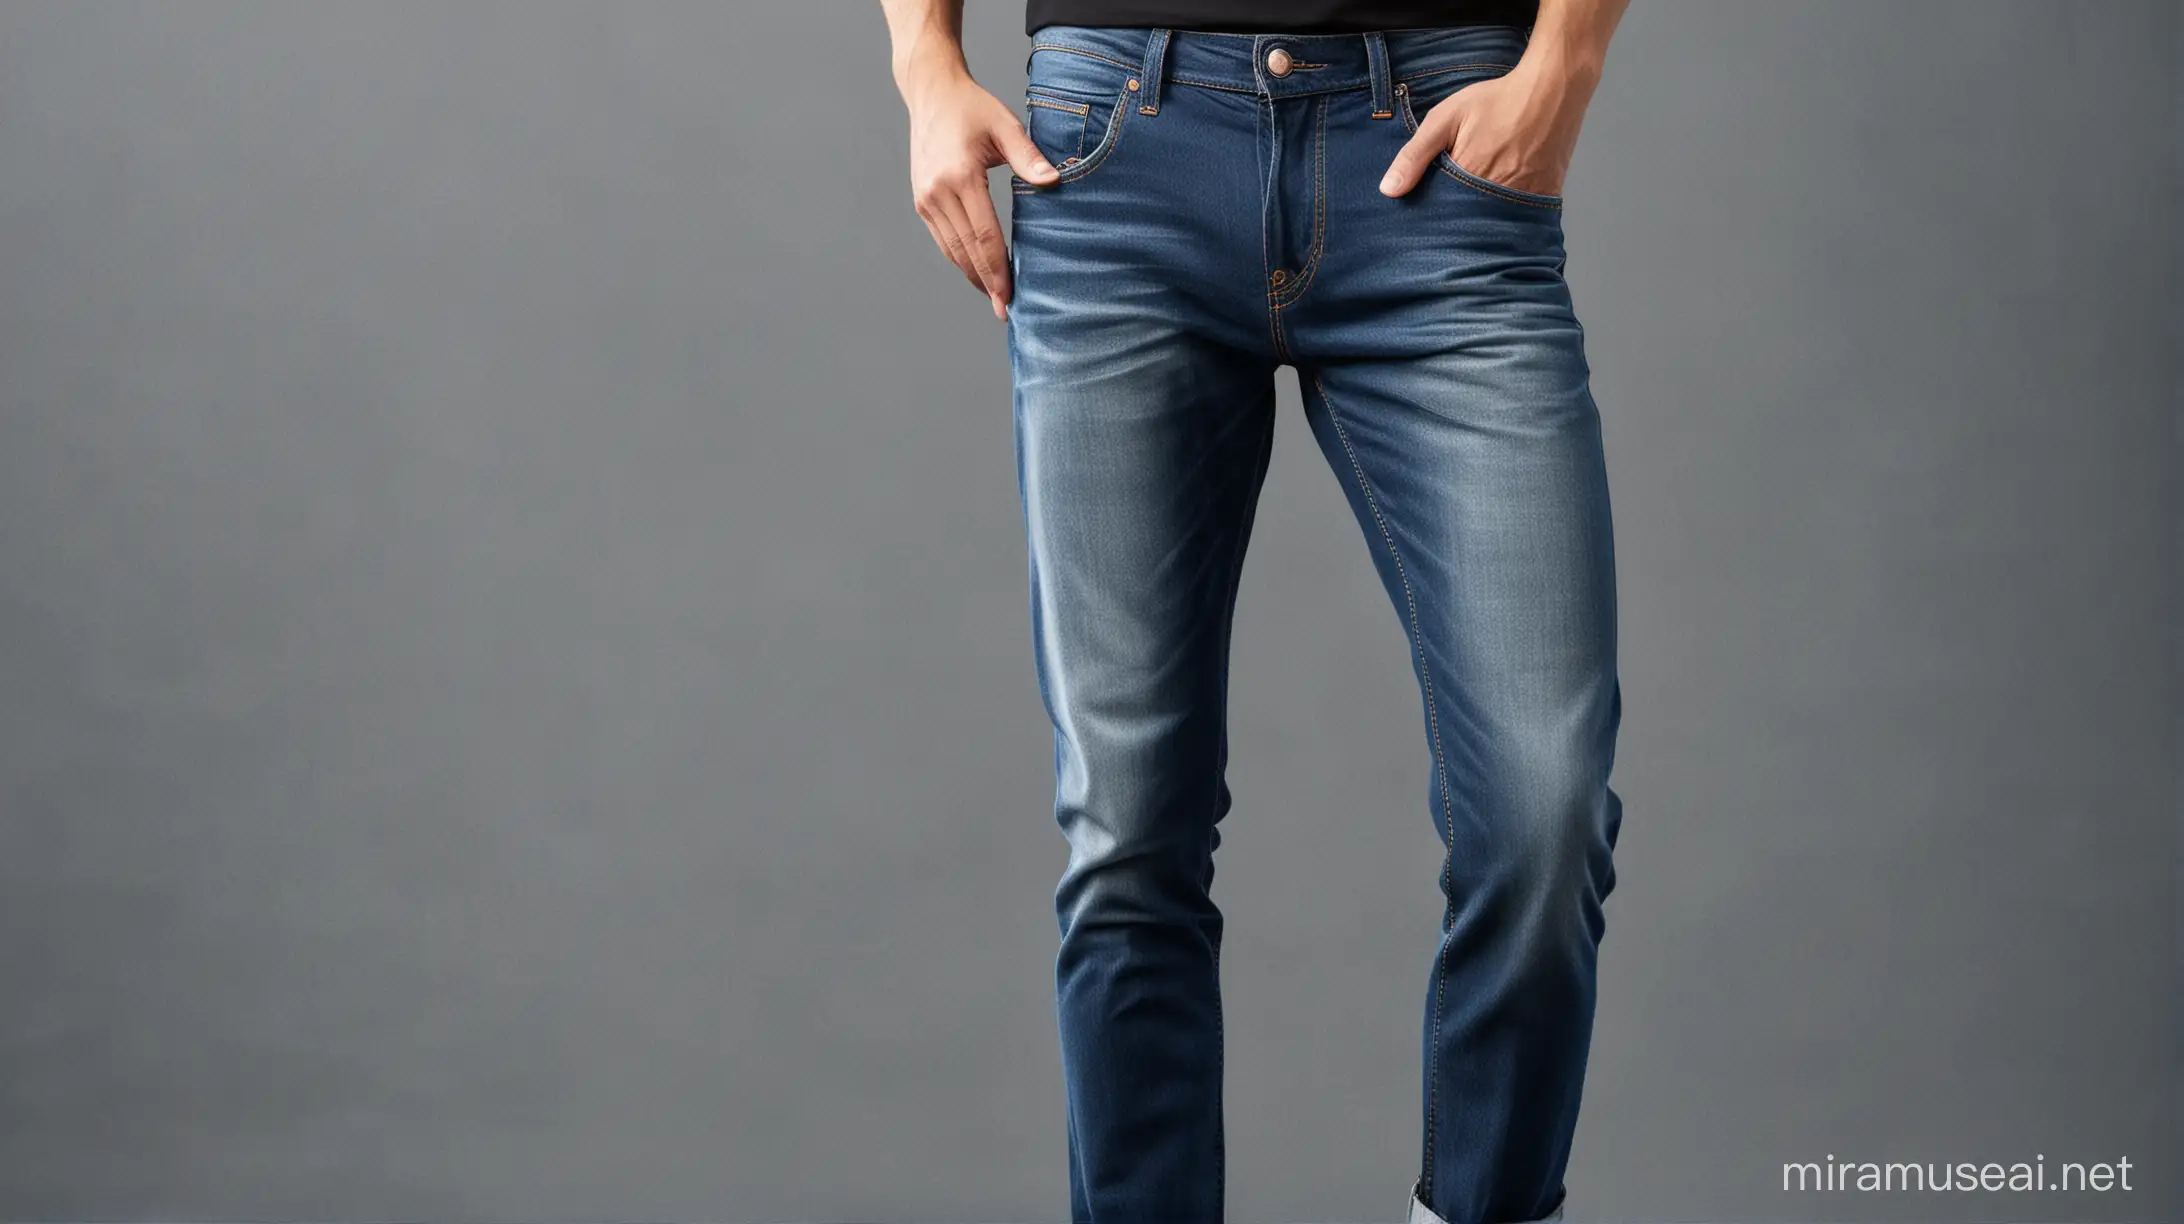 Denim Fashion Trendy Jeans Showcase